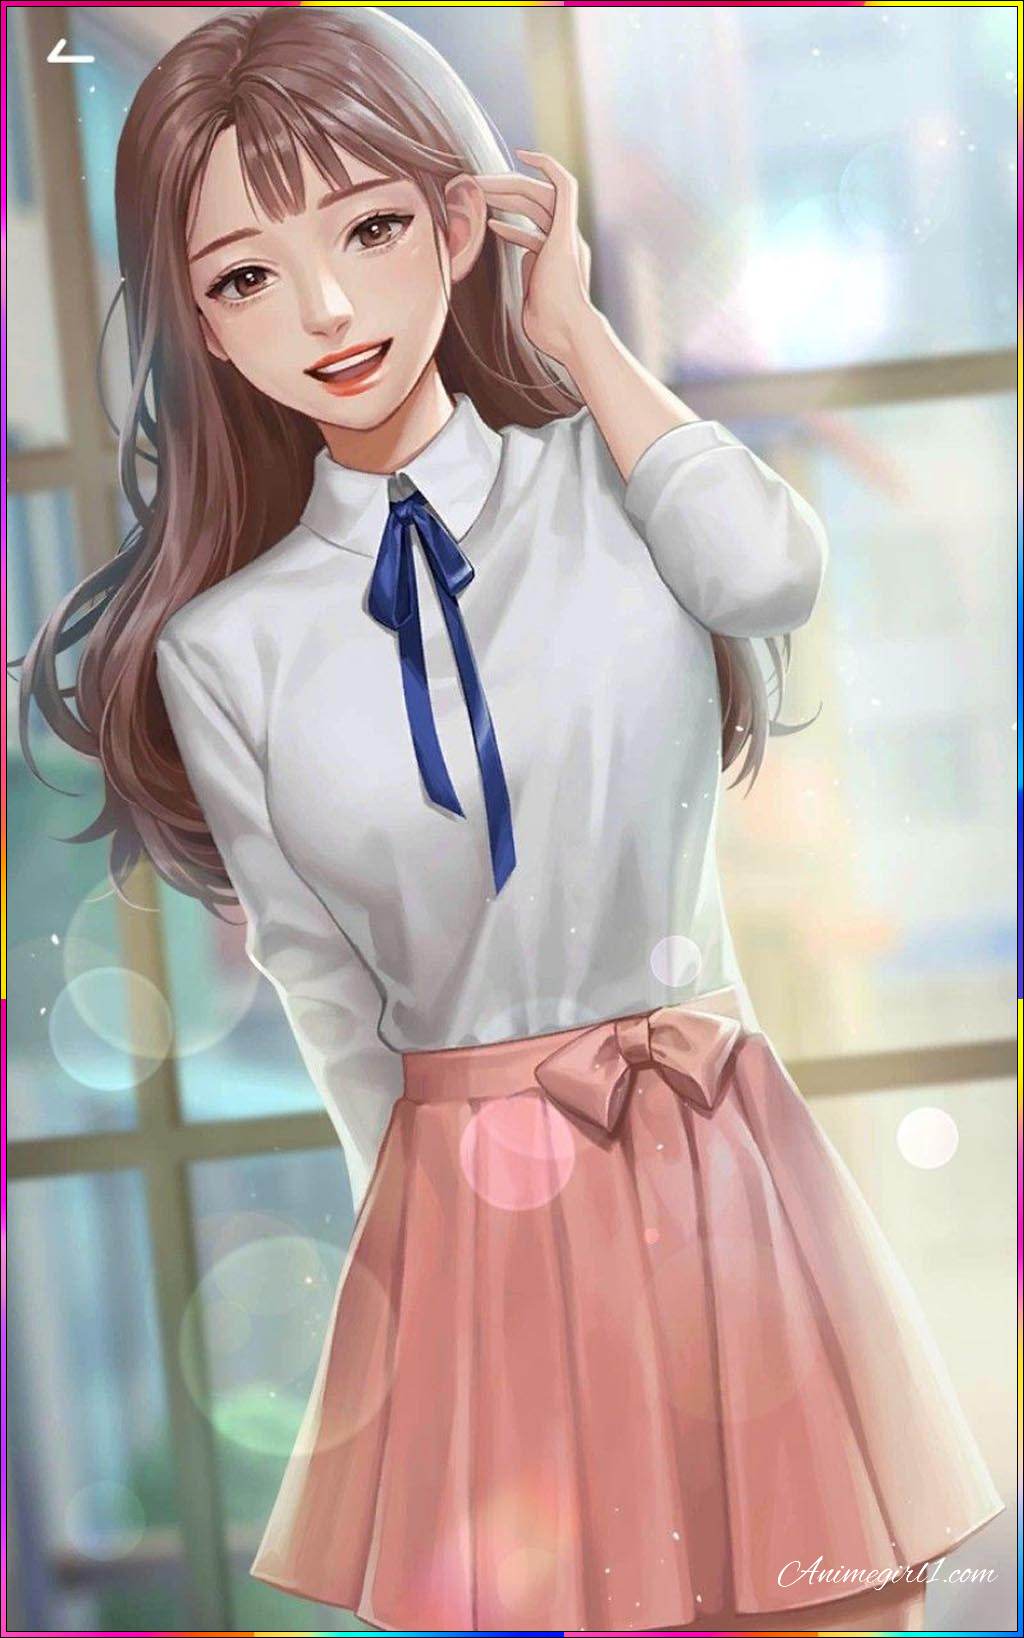 cute girl anime smiling